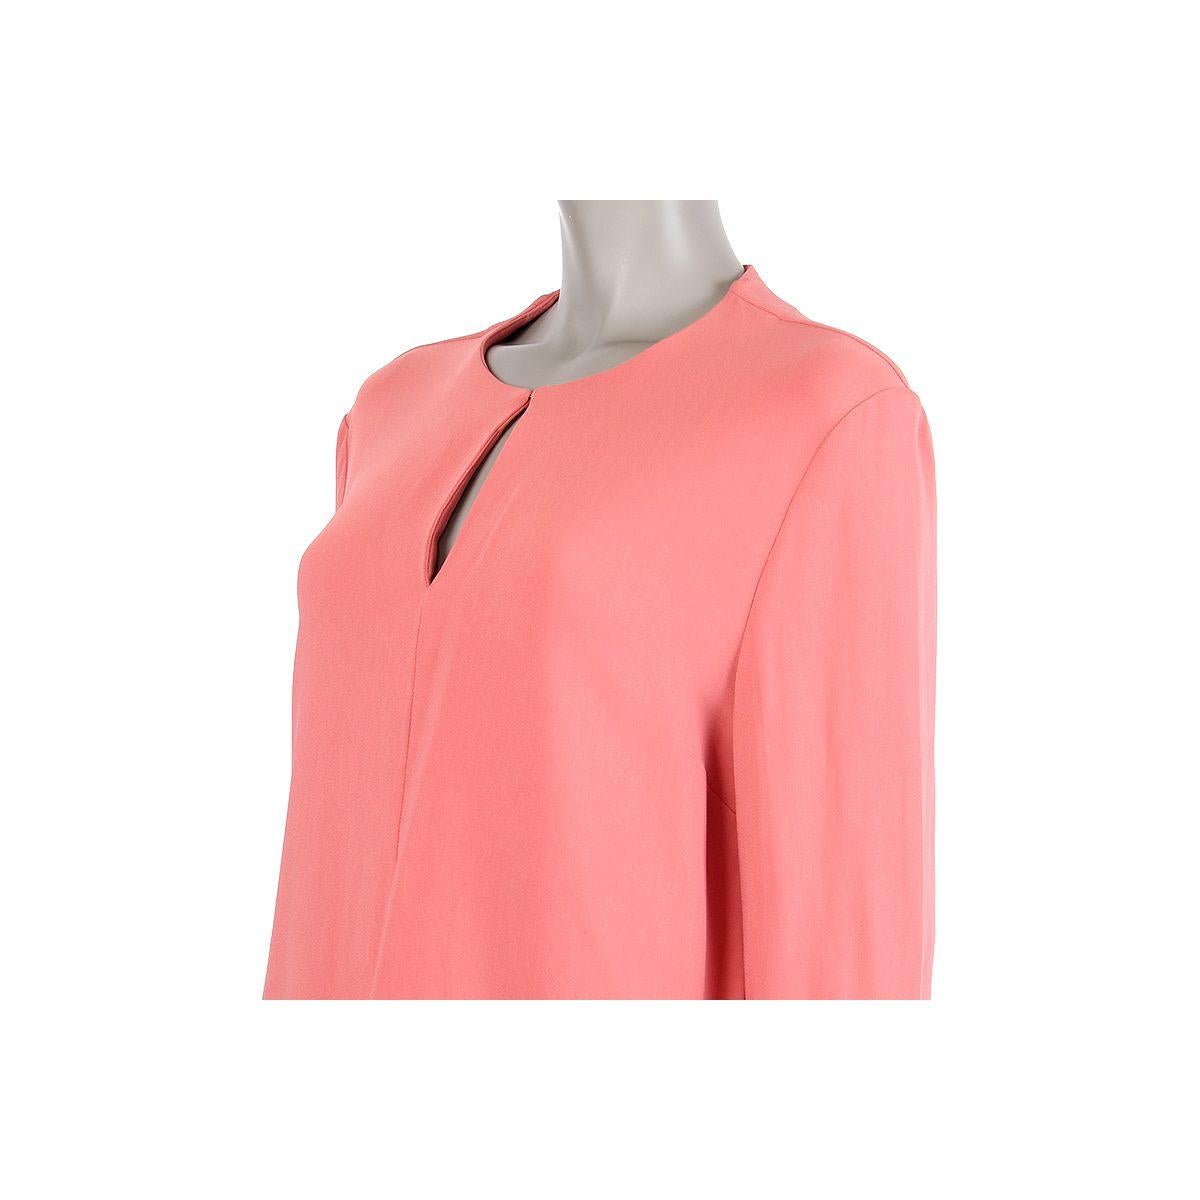 Pink STELLA MCCARTNEY pink rayon KEYHOLE Blouse Shirt 46 XL For Sale